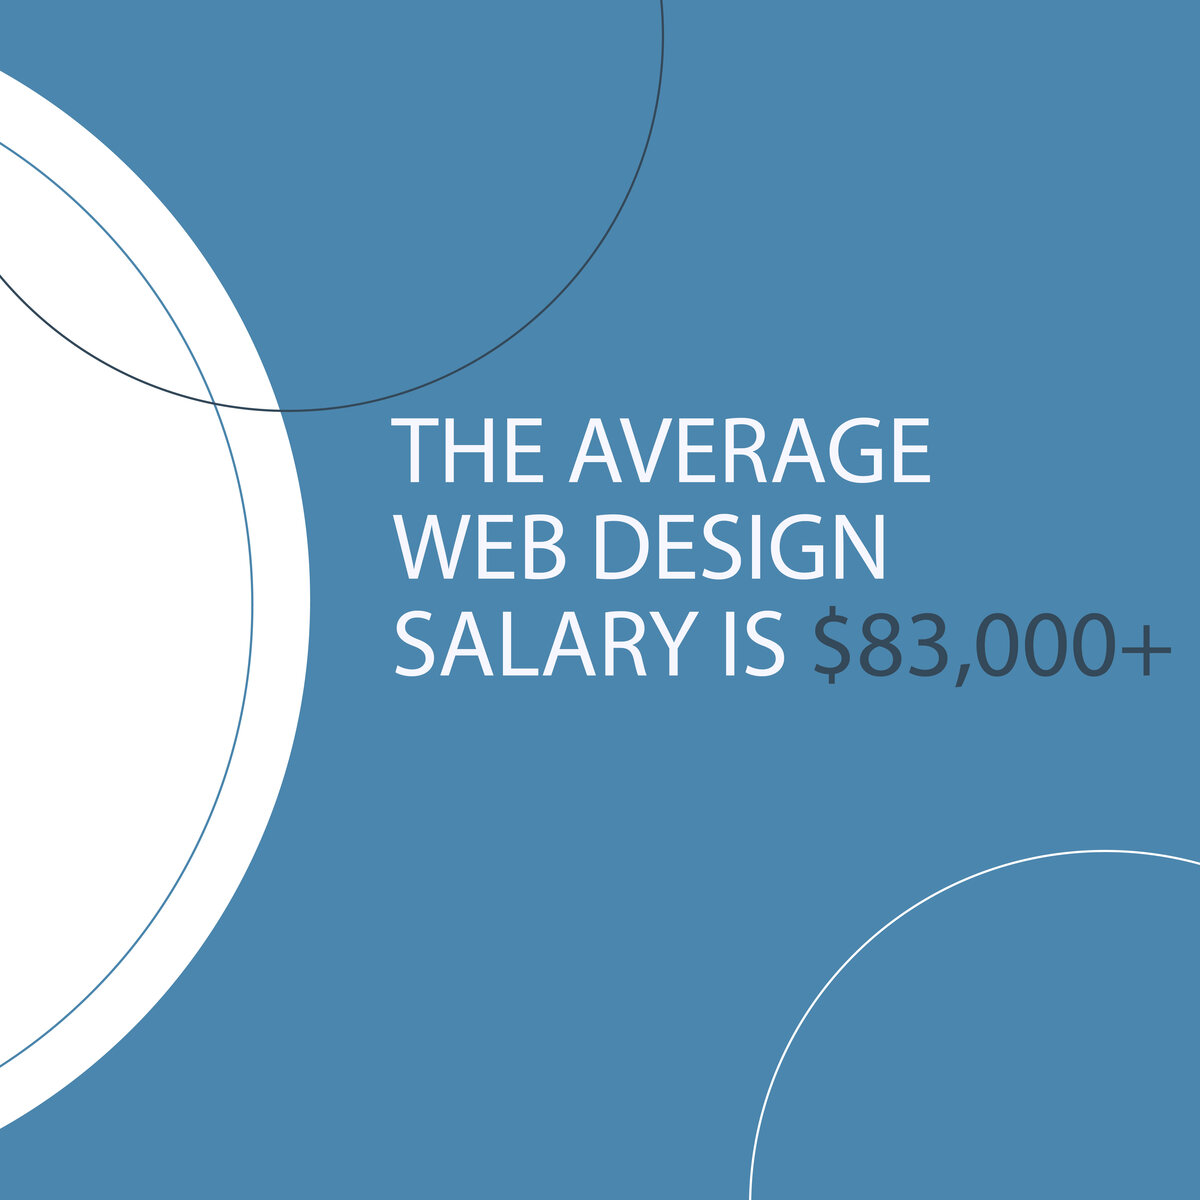 Web Designer Average Salary is $83,000